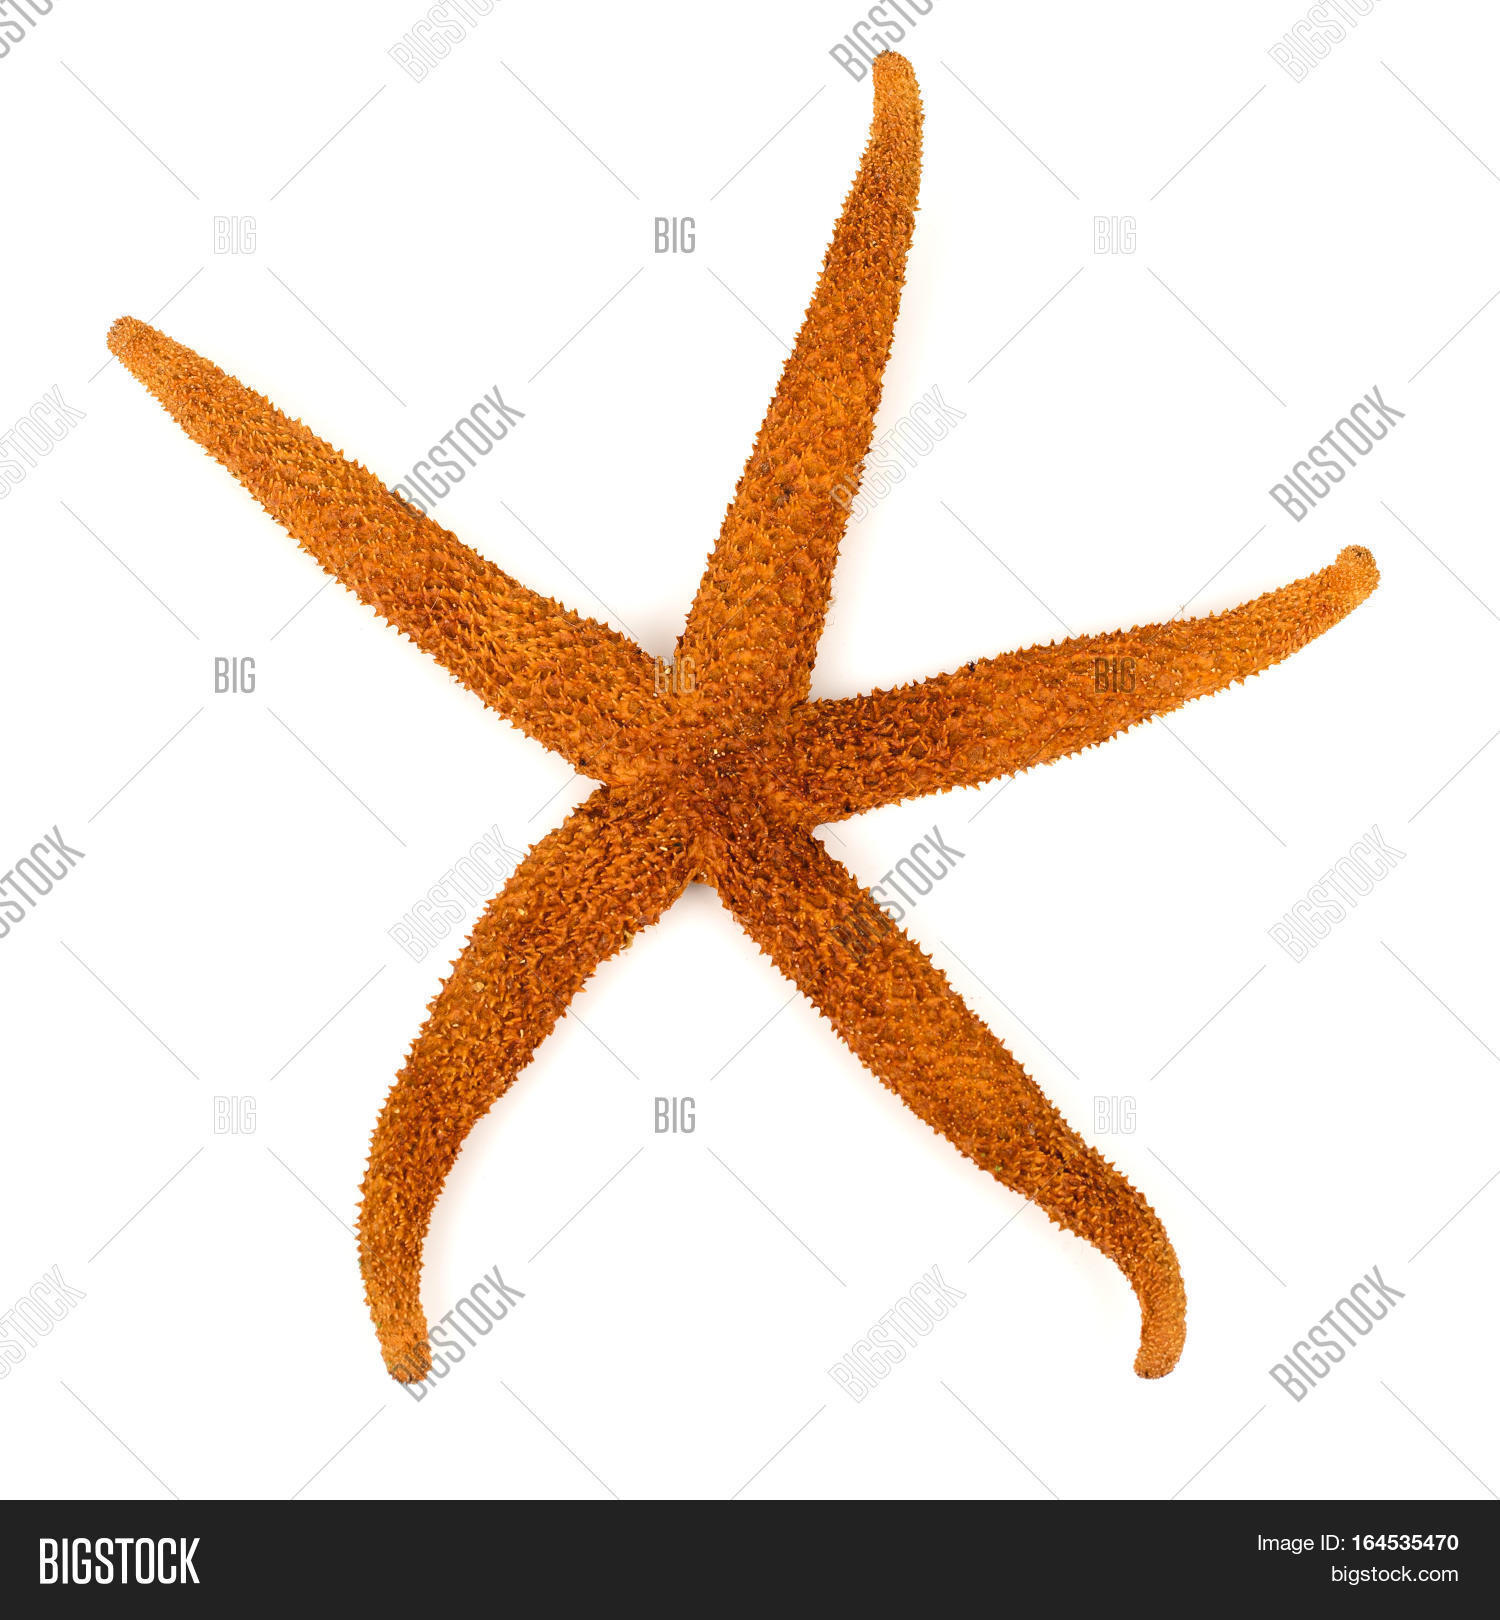 Starfish Isolated On White Image & Photo | Bigstock